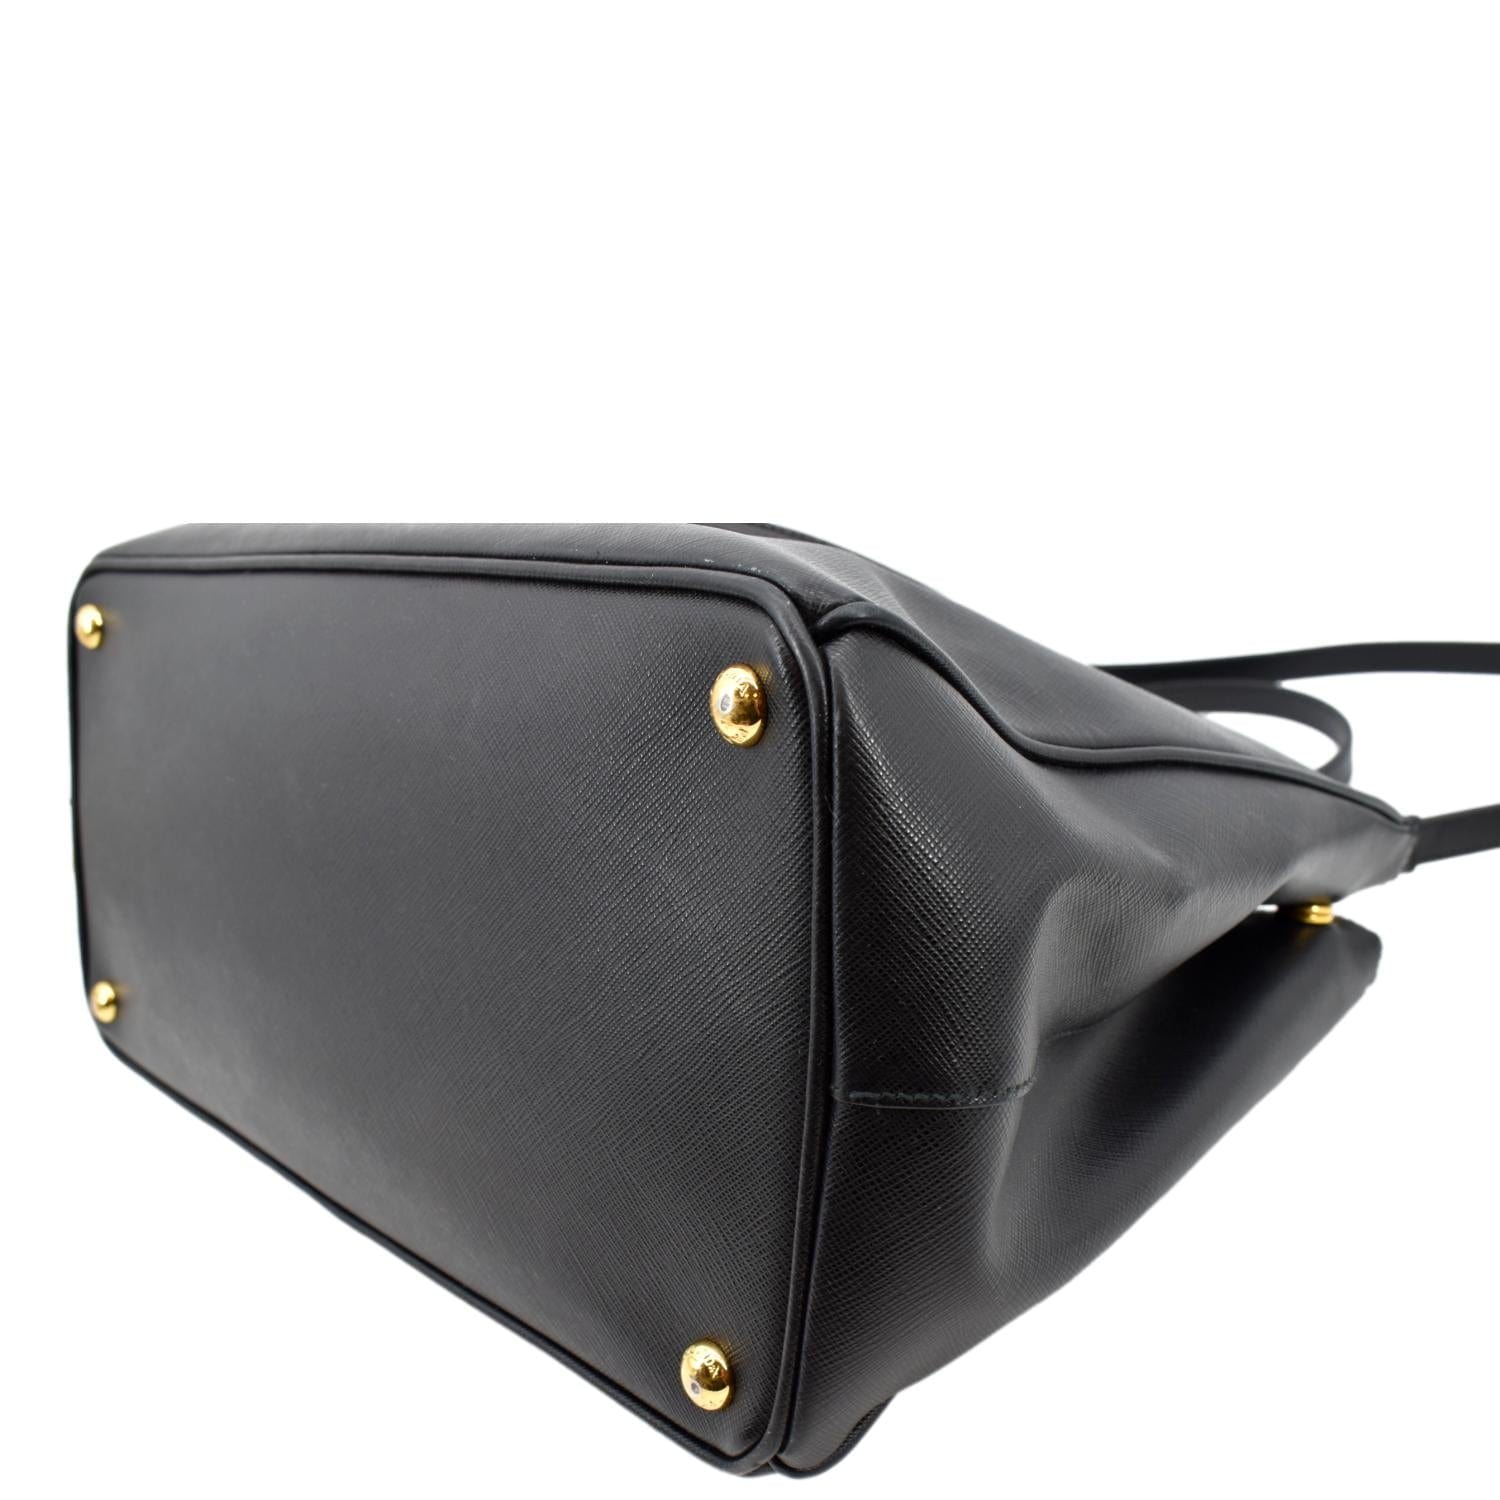 Prada Tote Bag - Prada Large Saffiano Leather Tote Shoulder Bag